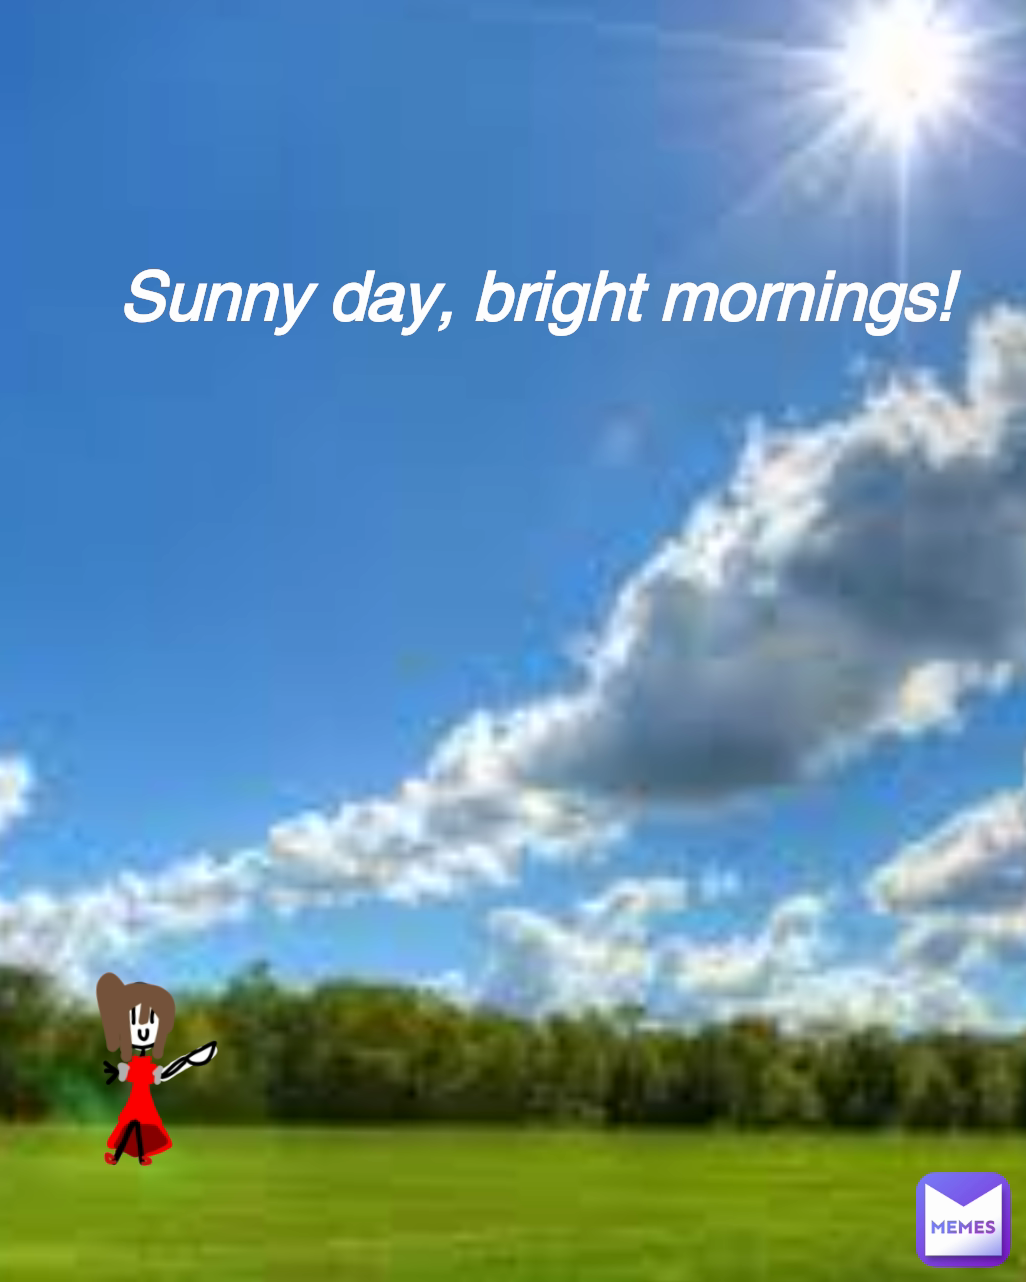 Sunny day, bright mornings!